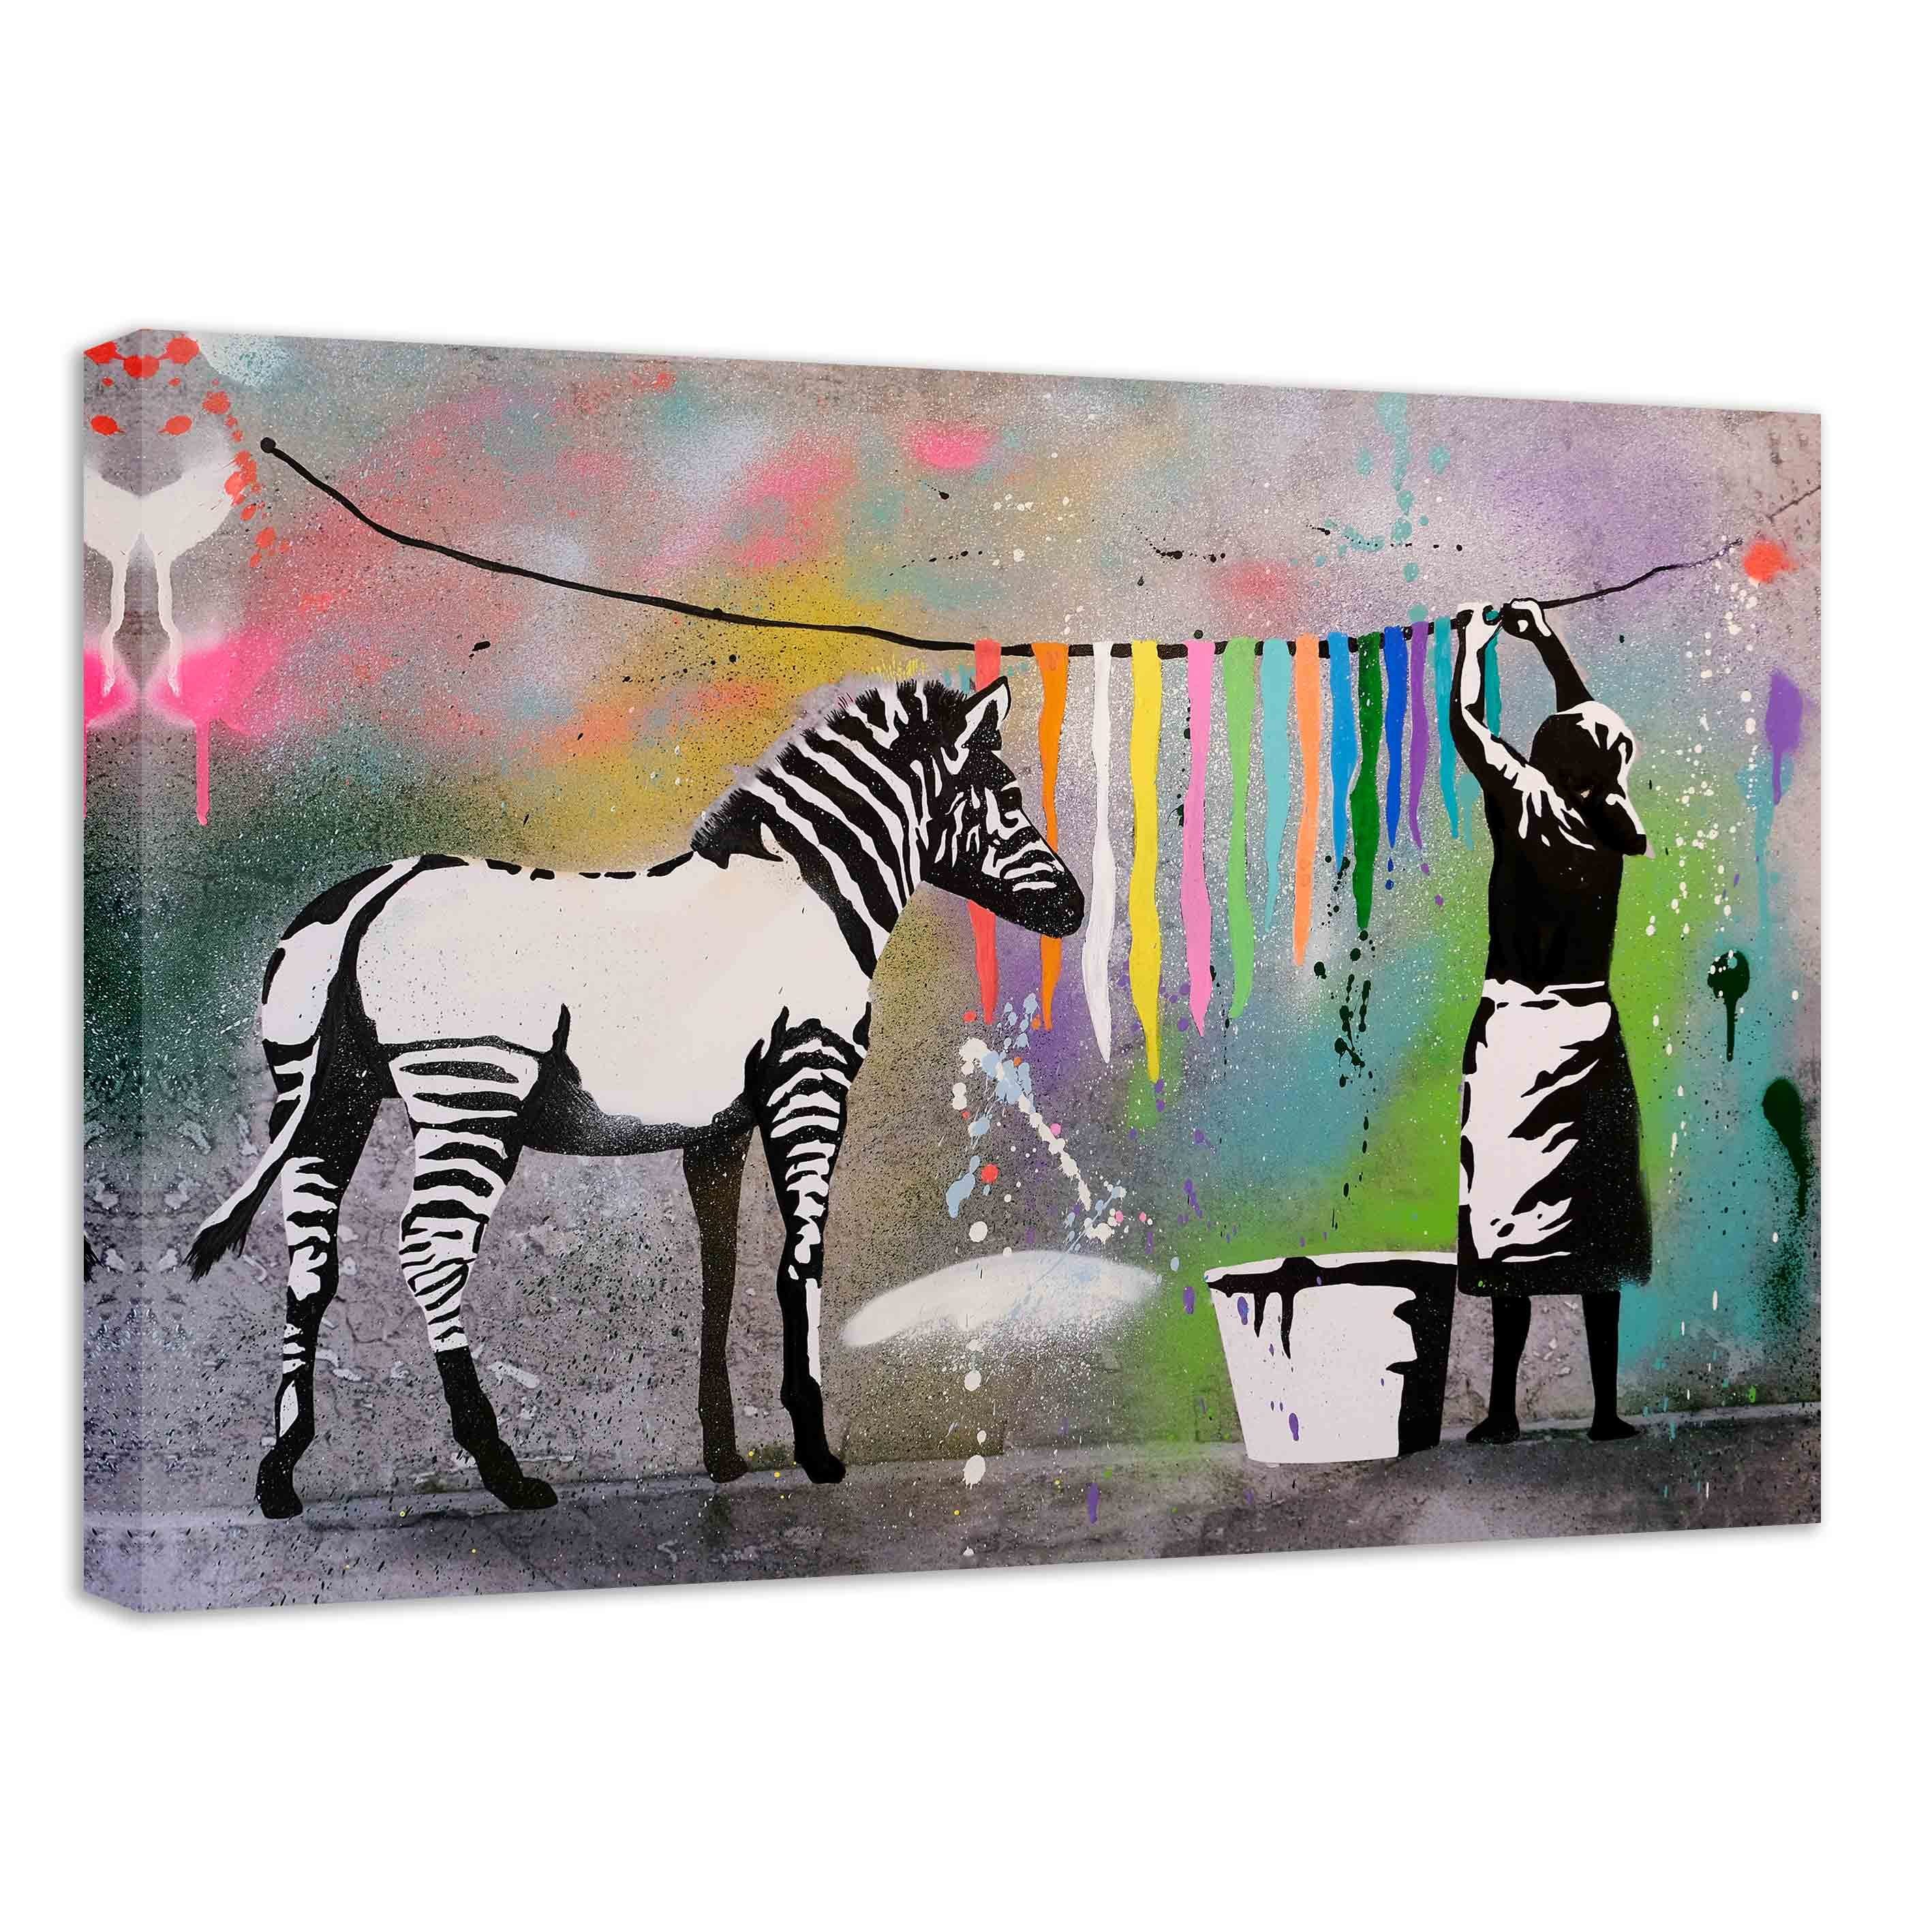 Leinwando Wandbild »Banksy Bilder auf Leinwandbild Zebra Farbe/ Street Art  graffiti fertig zum aufhängen« online kaufen | OTTO